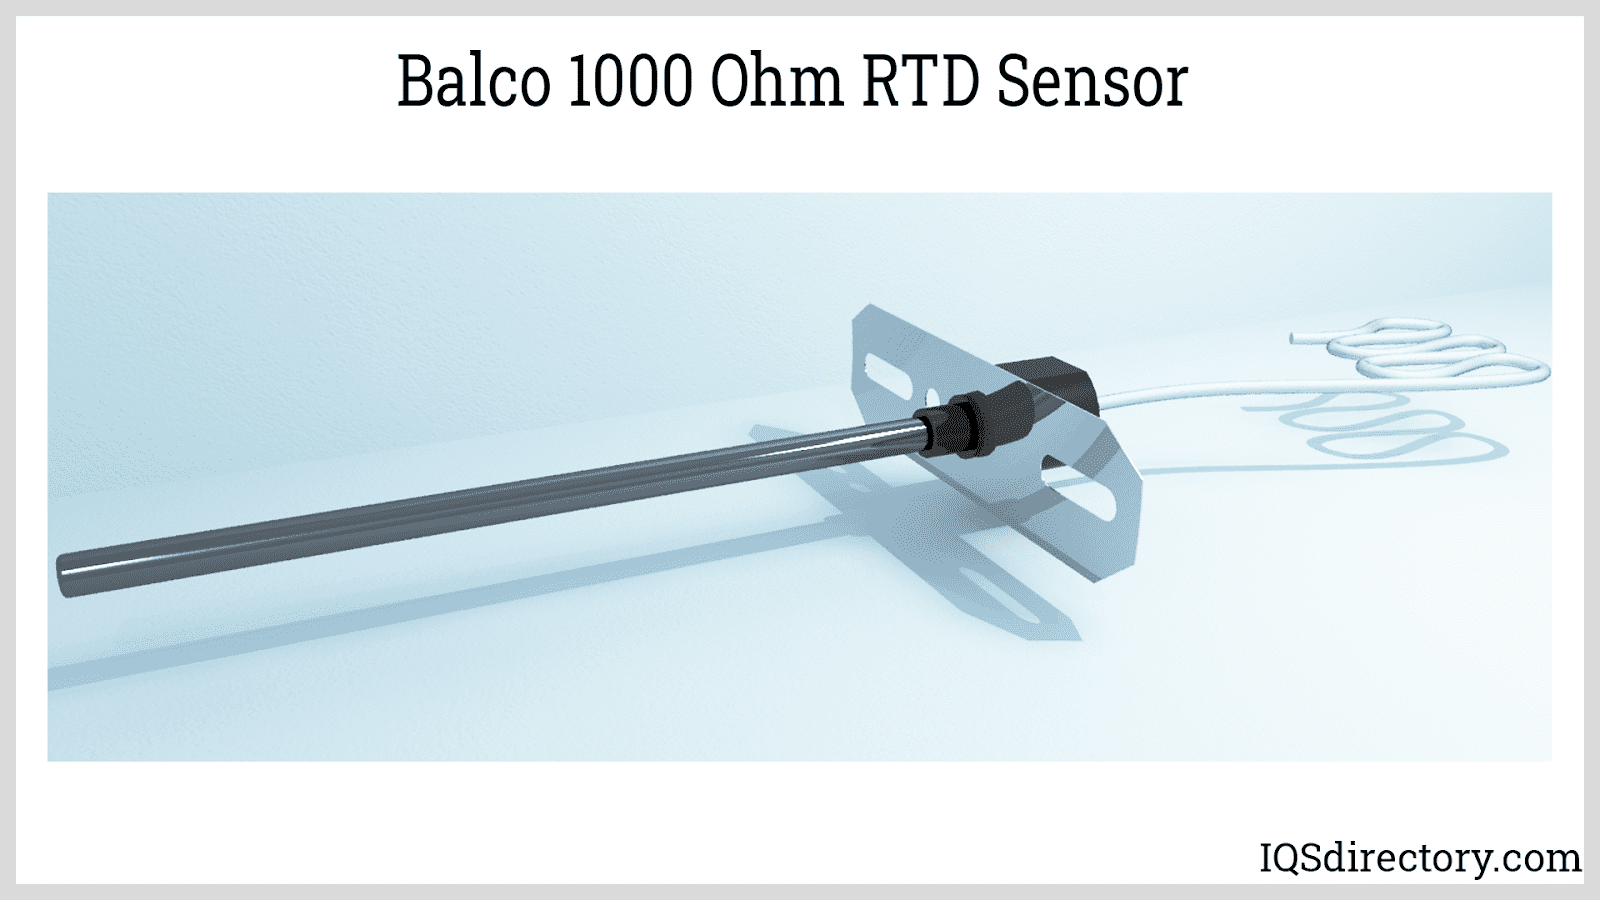 Balco 1000 Ohm RTD Sensor